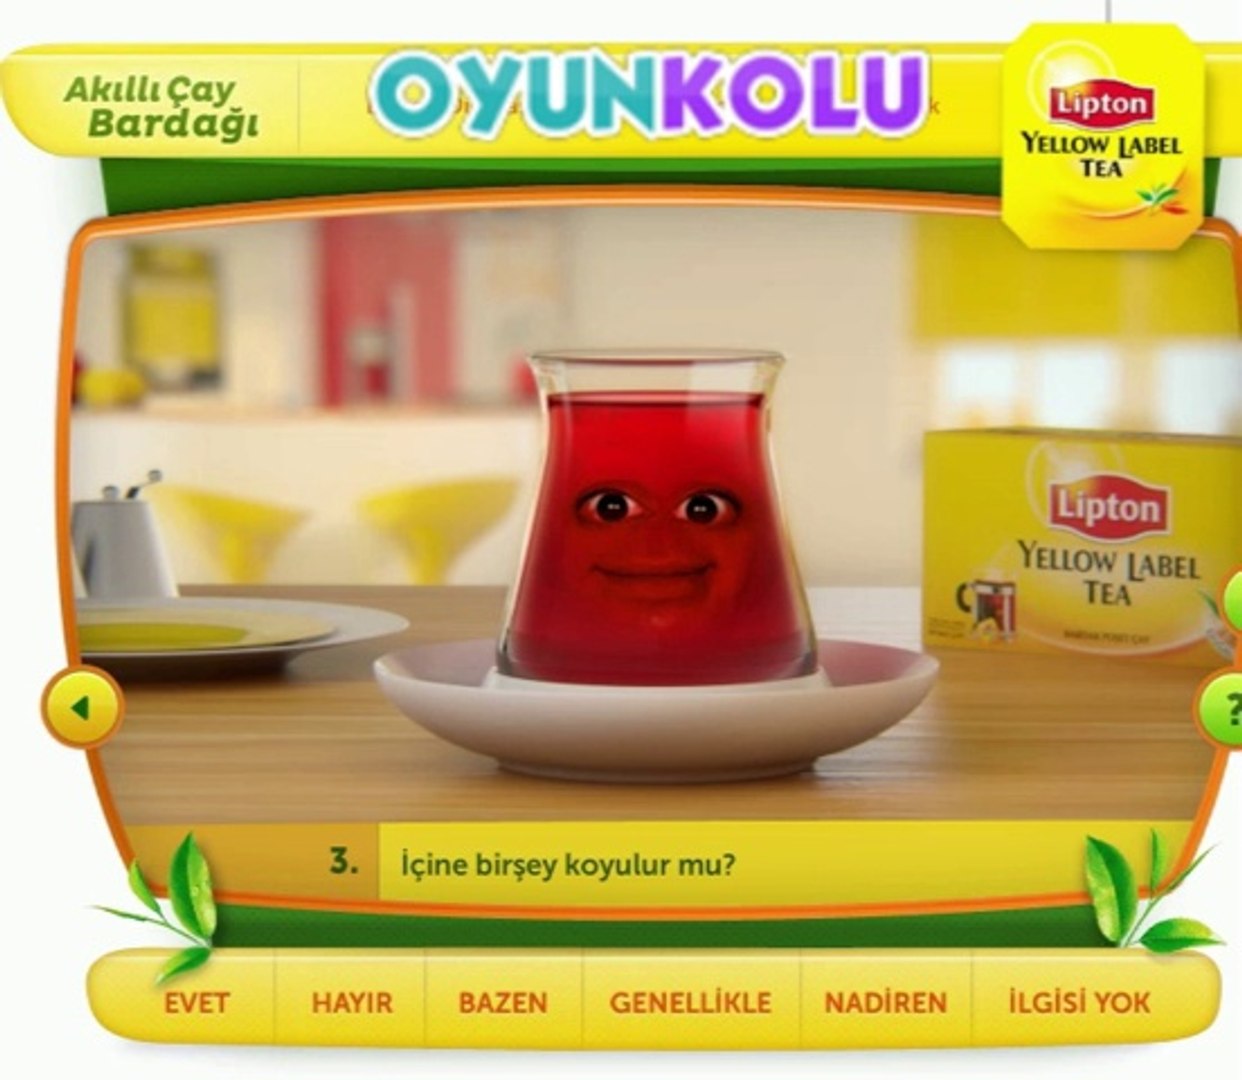 Lipton Akıllı Çay Bardağı Oyunu Nasıl Oynanır - Dailymotion Video